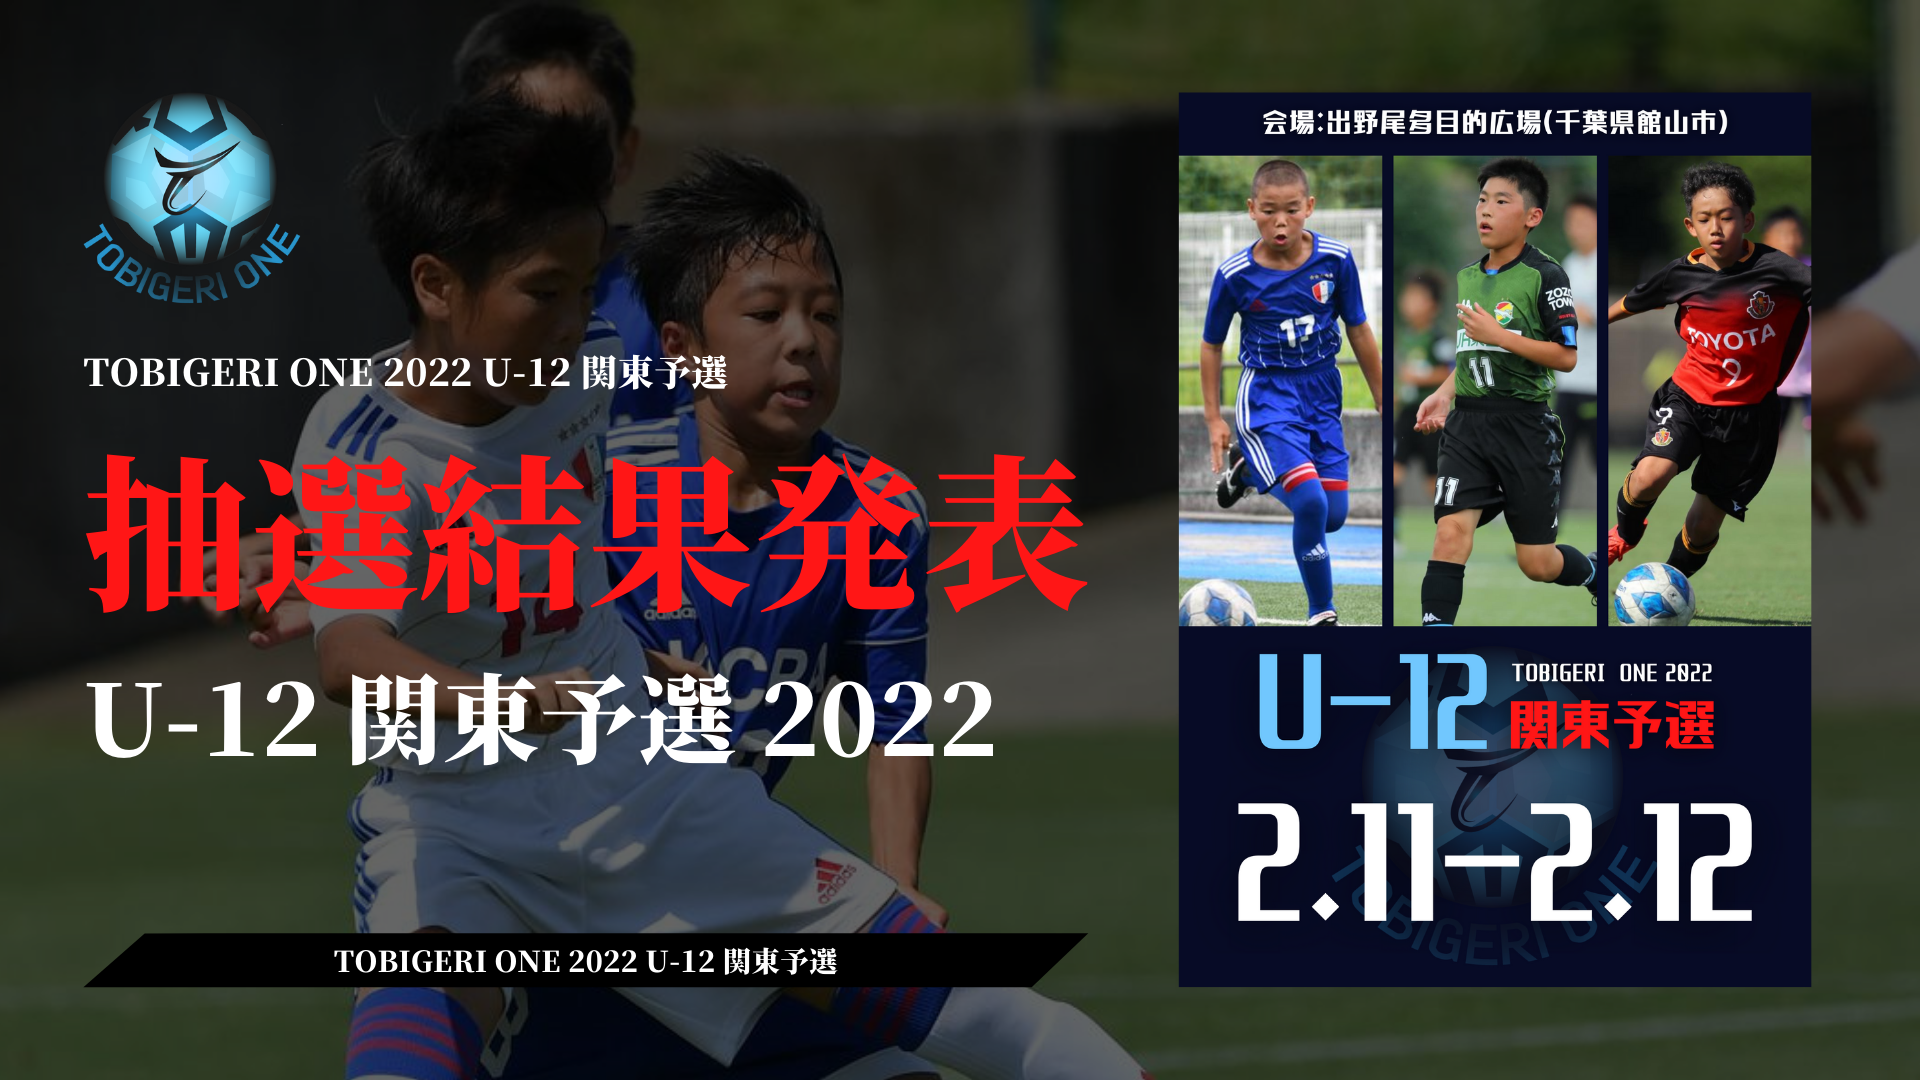 TOBIGERI ONE 2022 U-12 関東予選 抽選結果発表📣